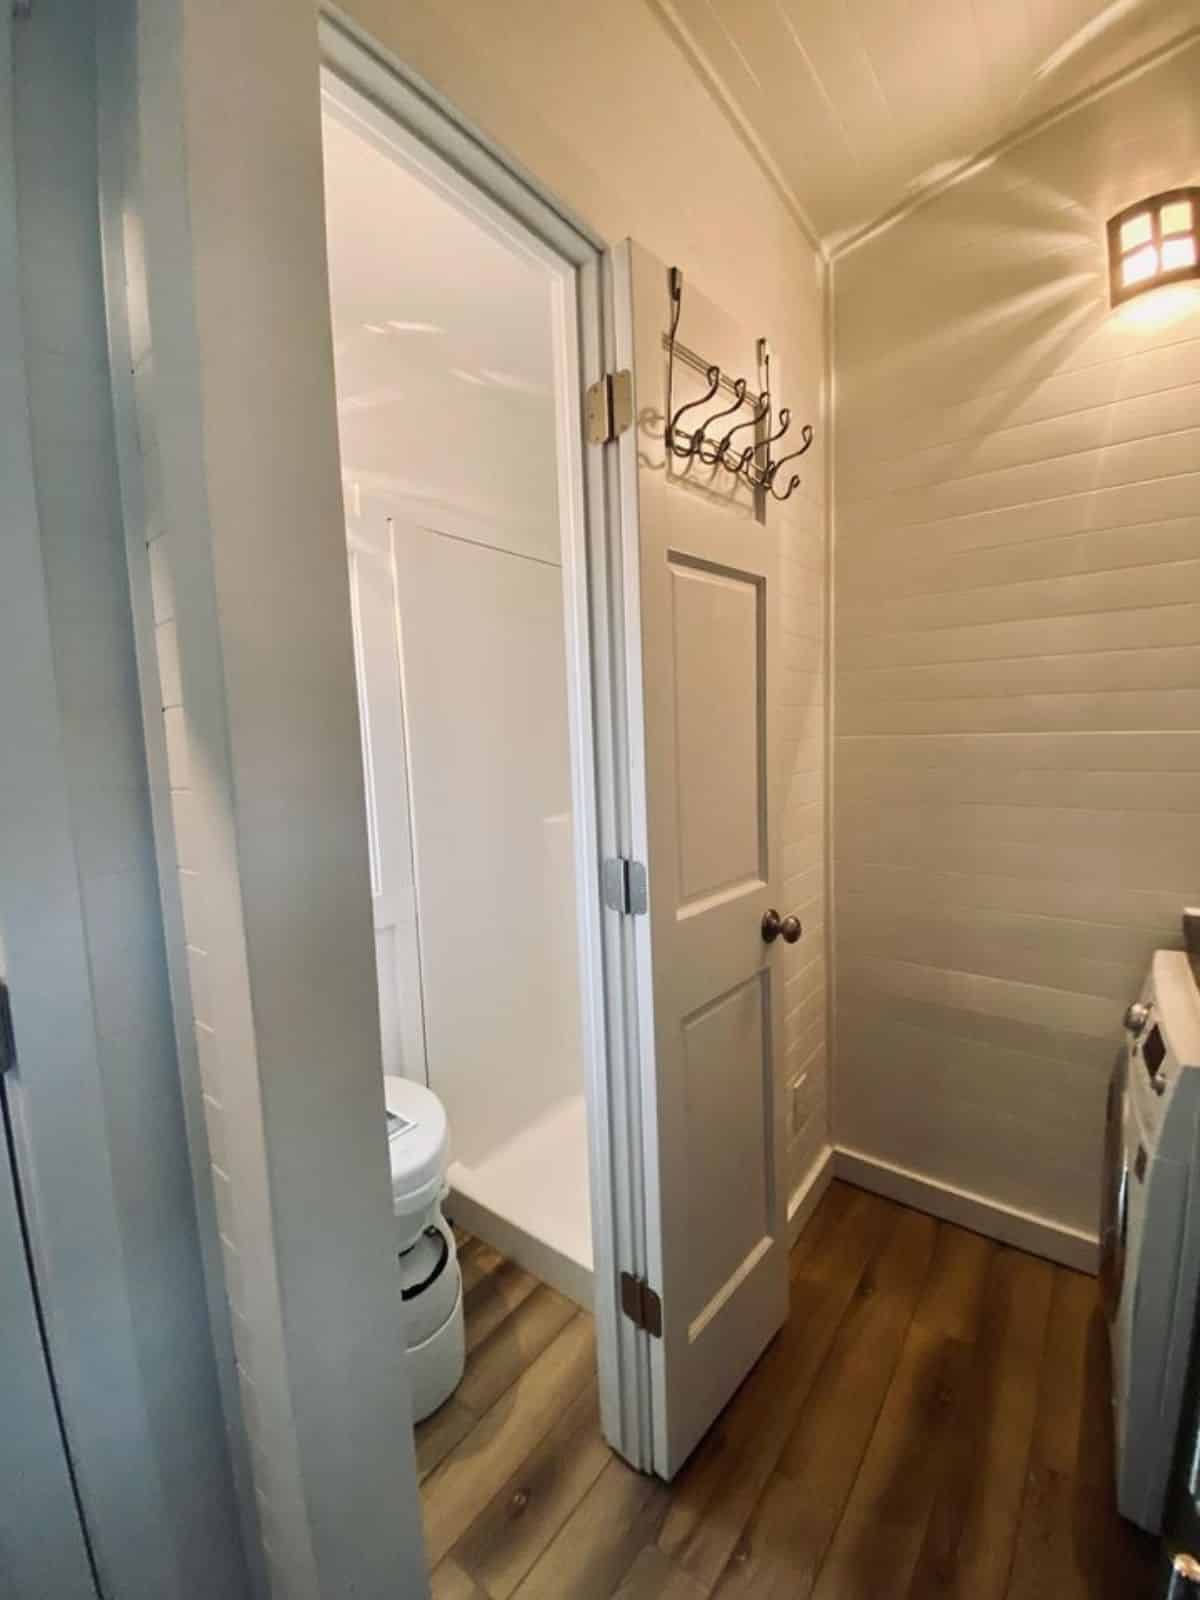 sliding door leading to the bathroom of Tumbleweed tiny home